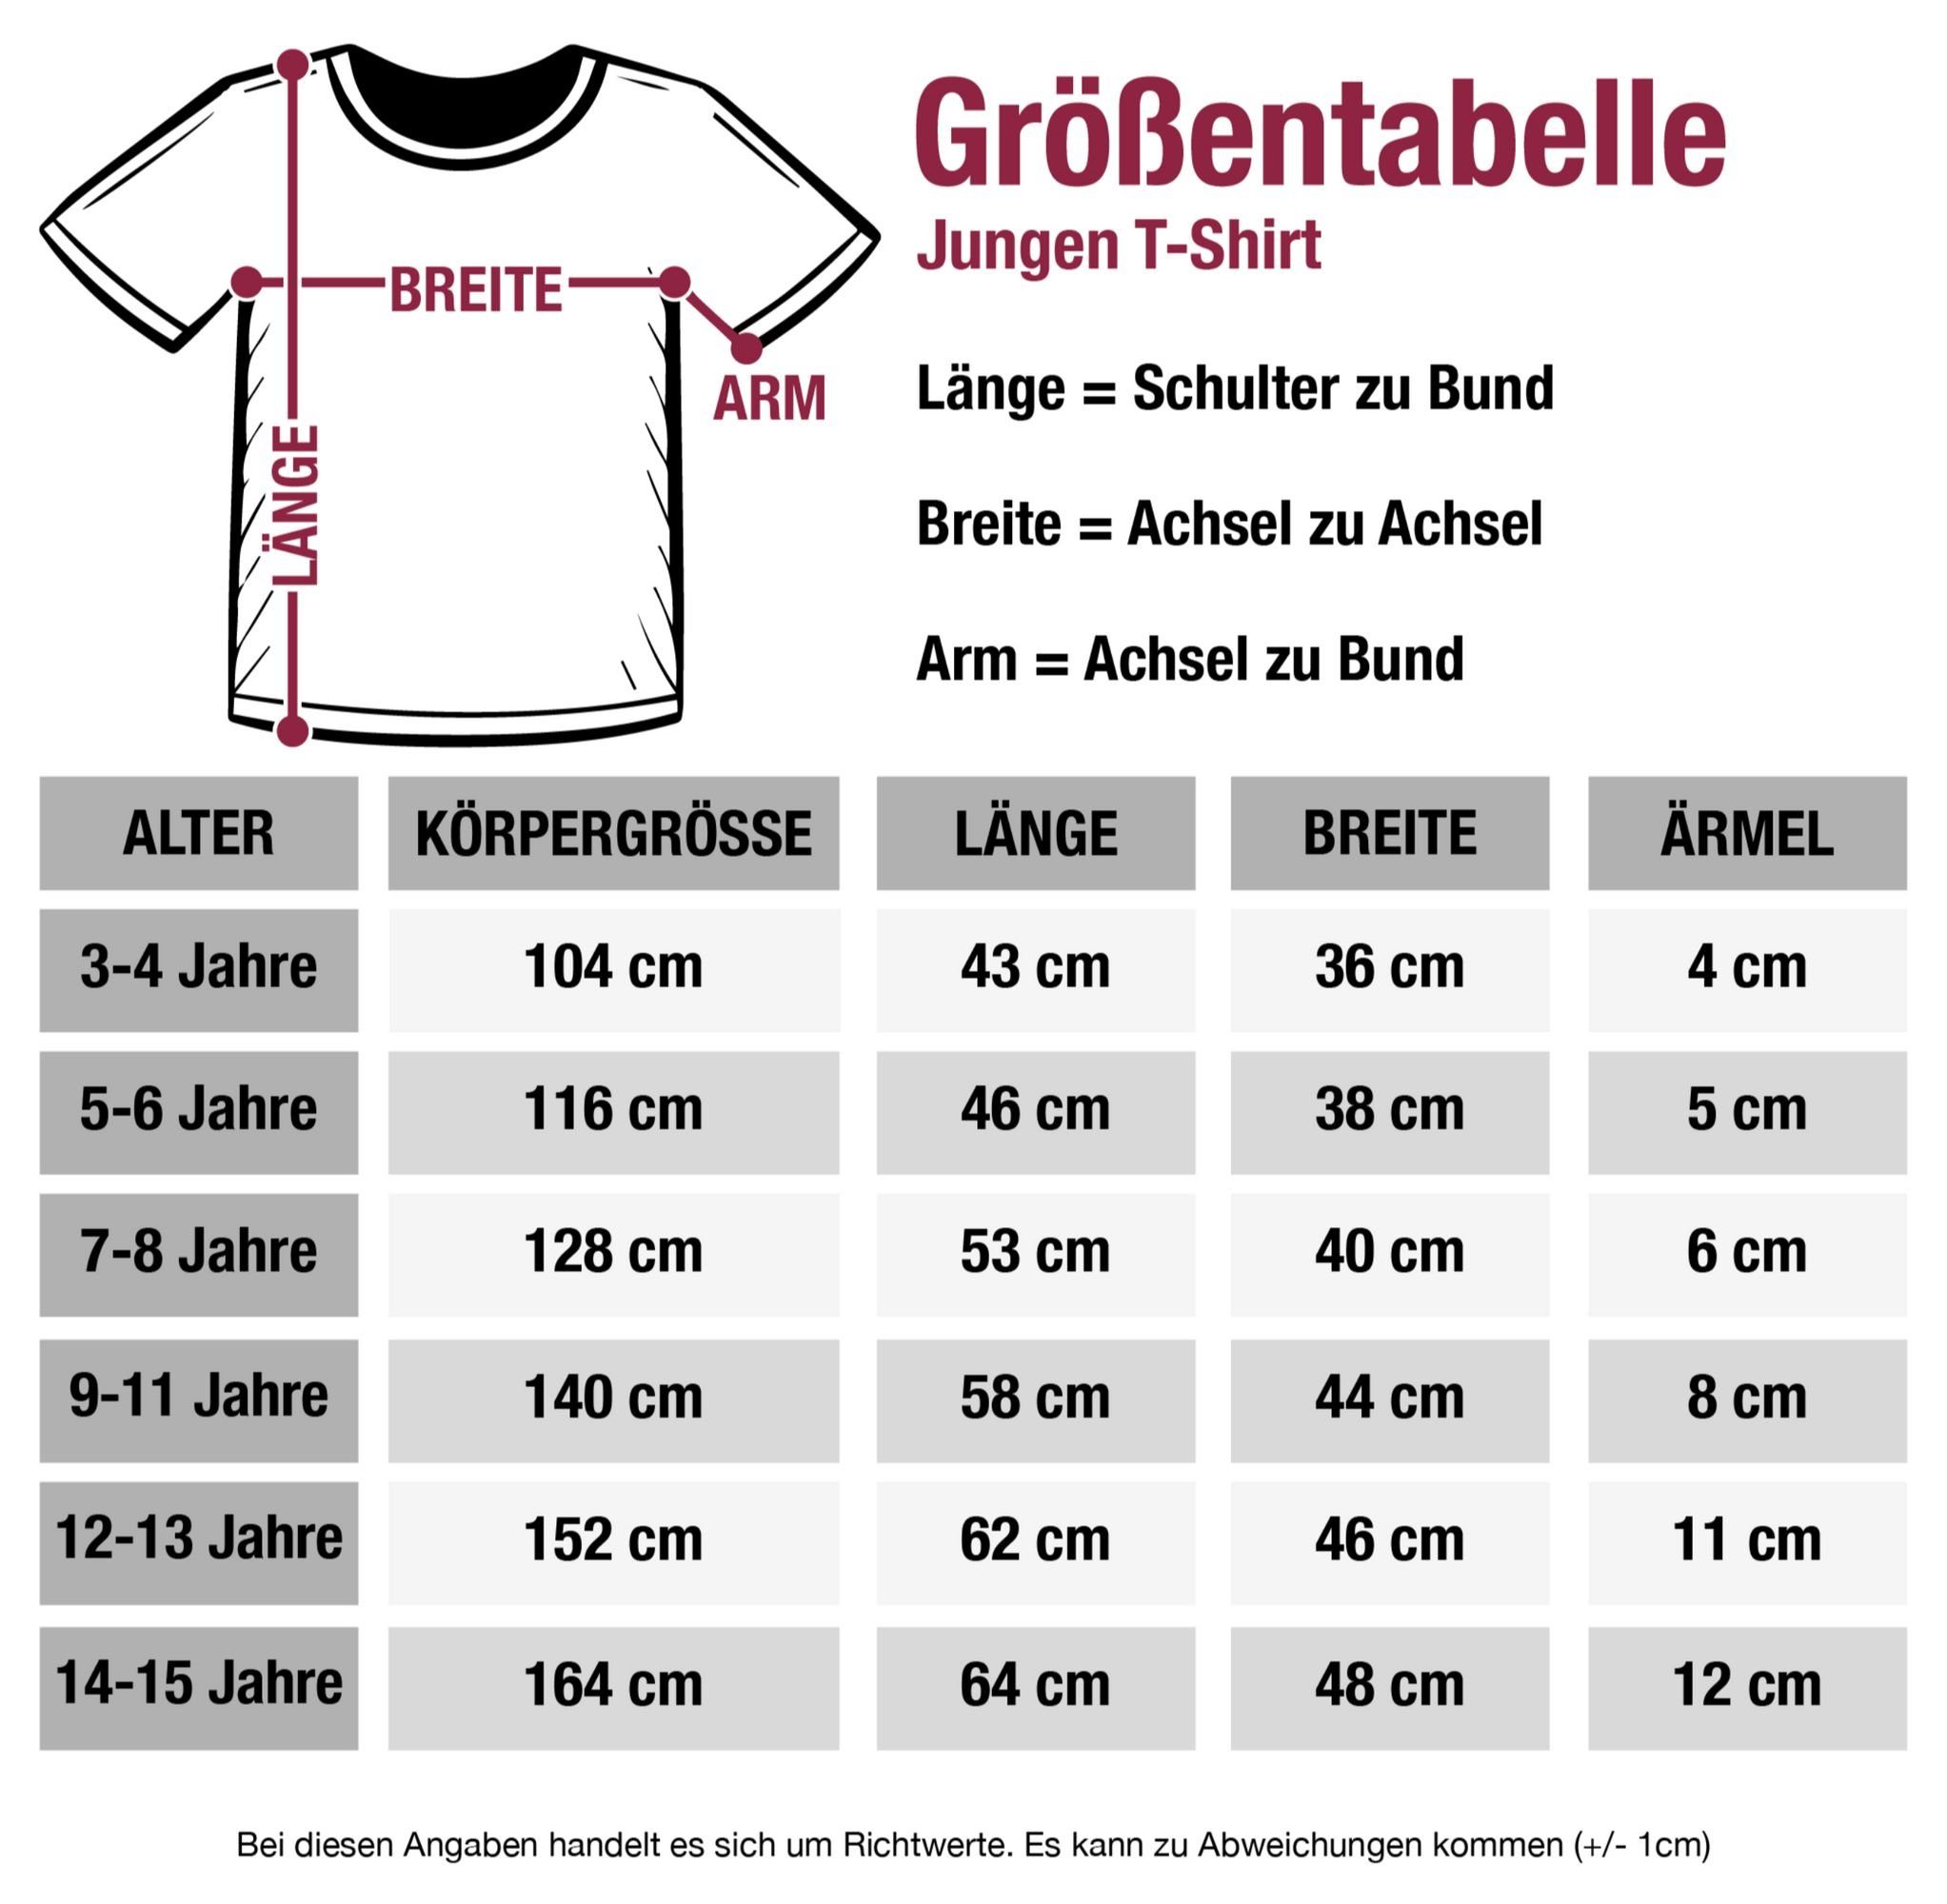 Geburtstag Shirtracer Dunkelblau 1 Sechster T-Shirt Zahlen 6.